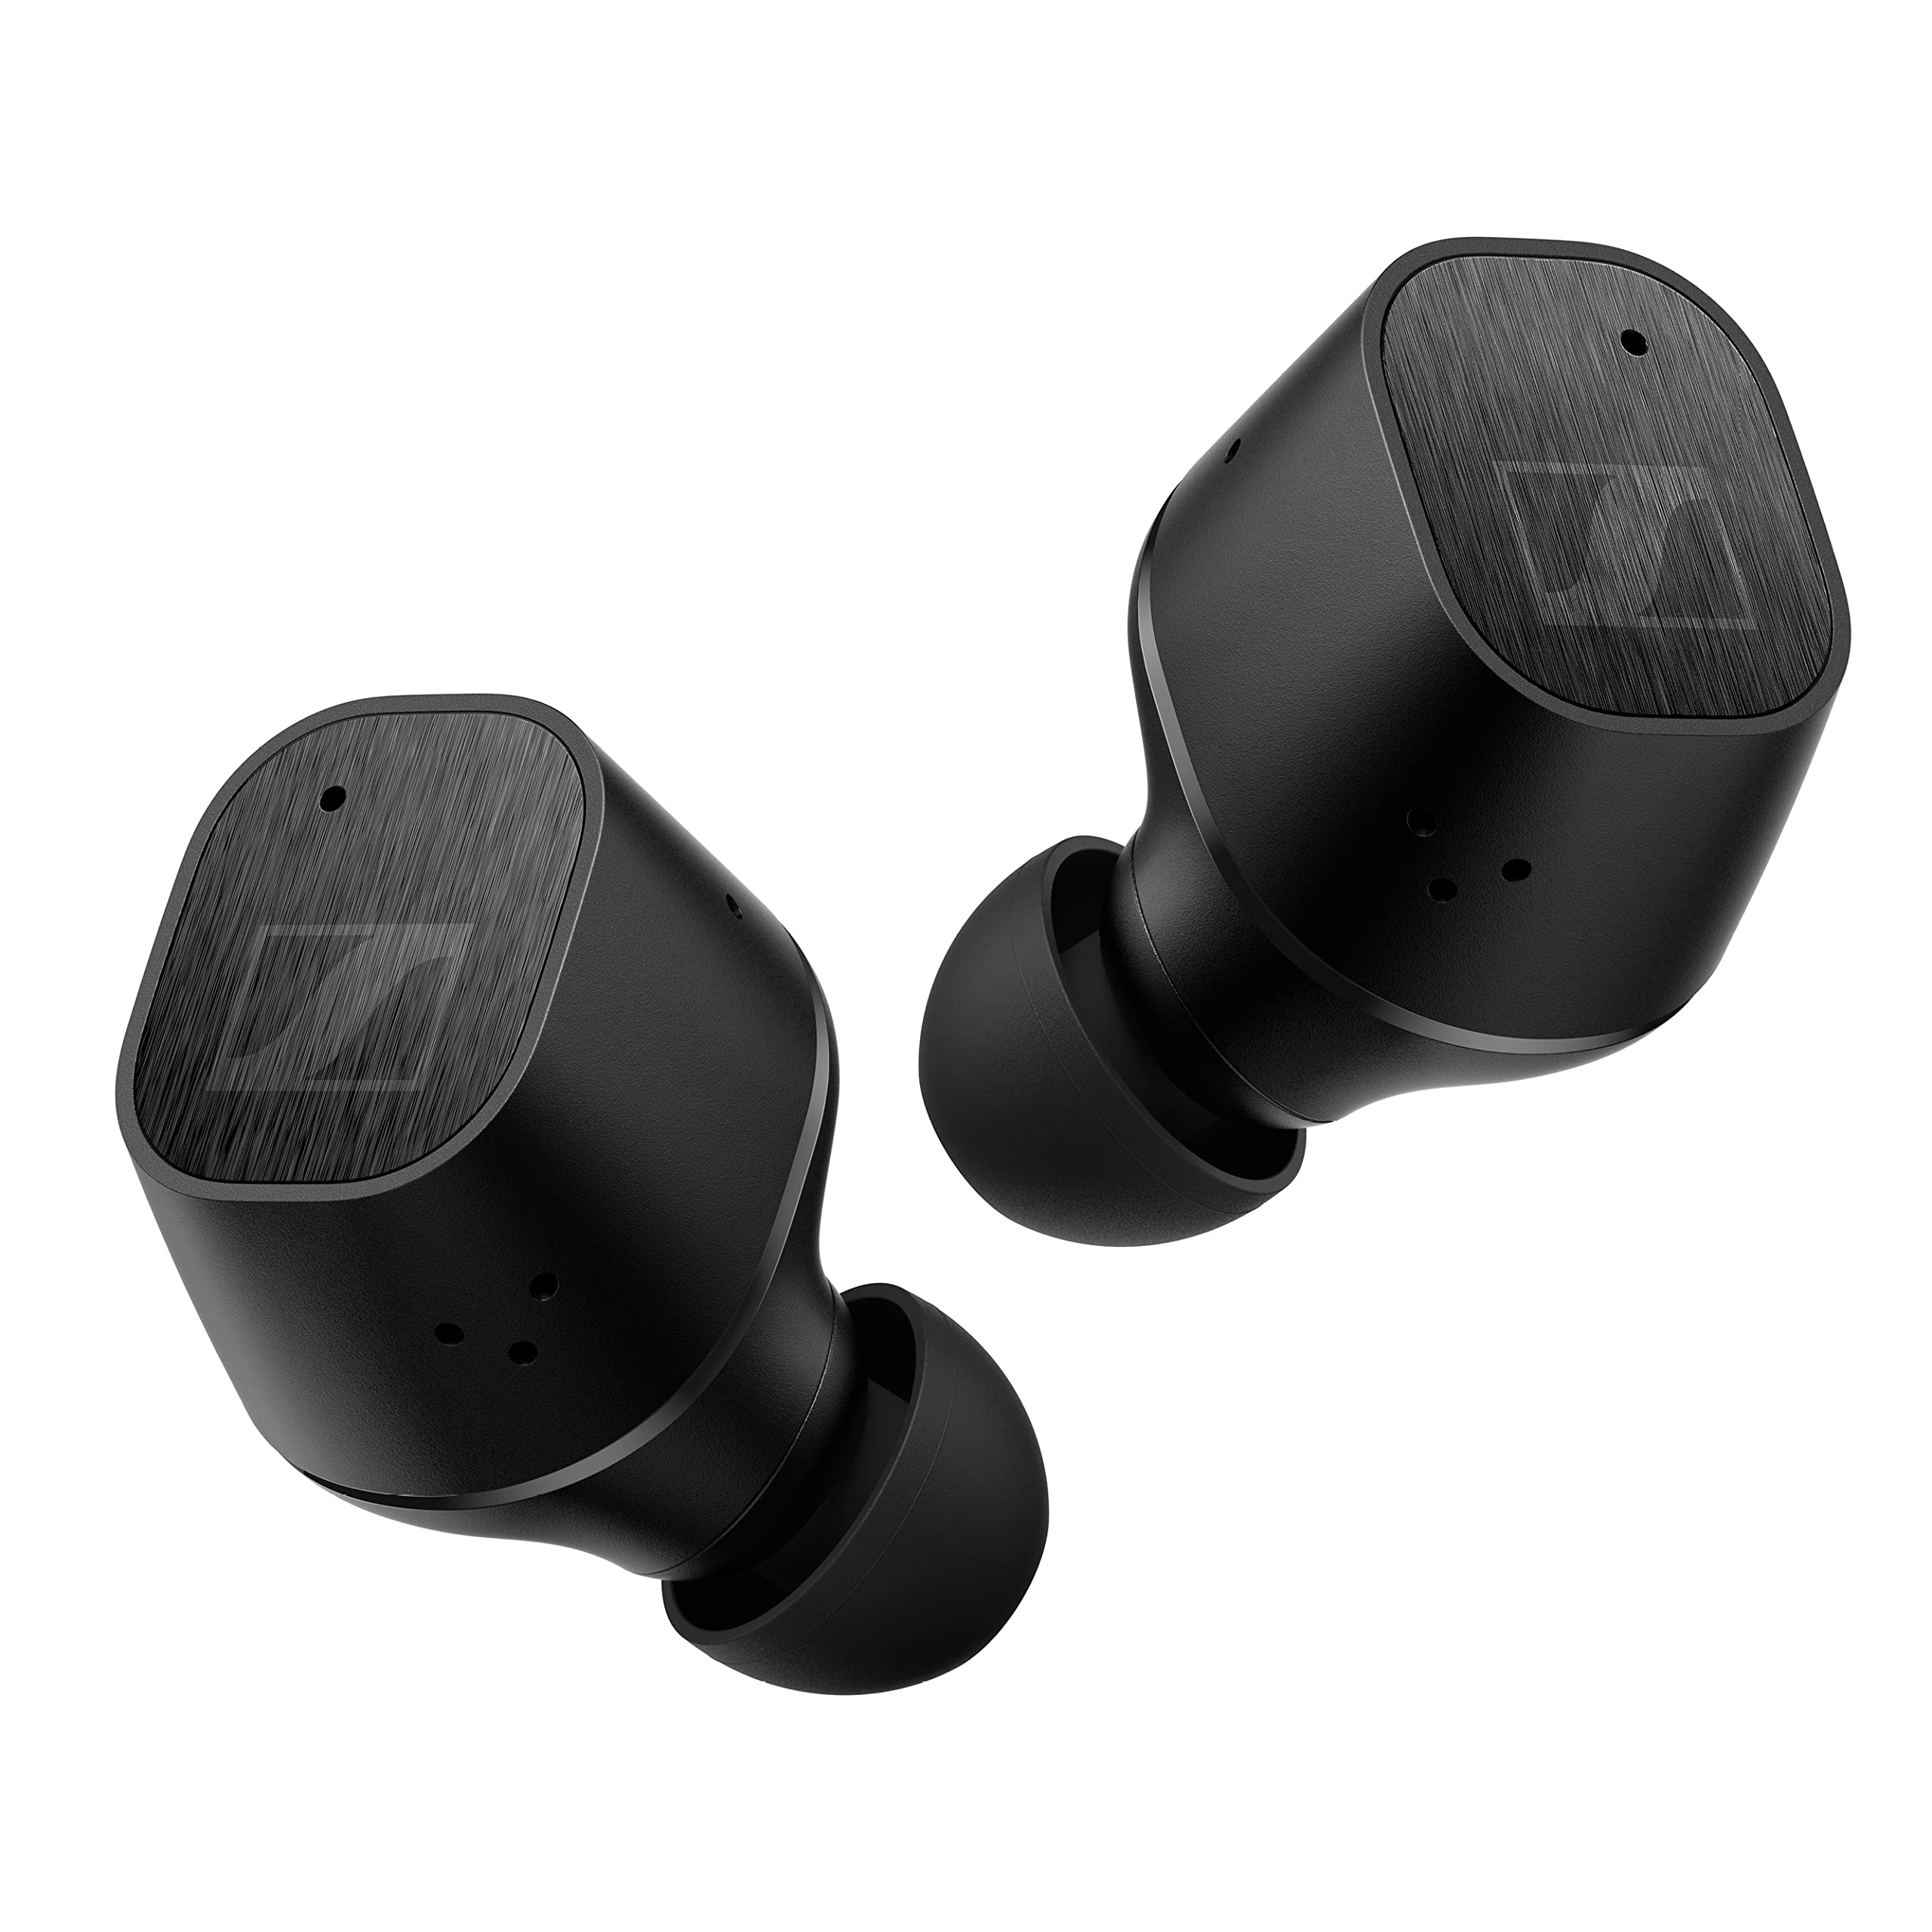 Sennheiser Consumer Audio CX Plus True Wireless Special Edition, Bluetooth in-Ear Headphones $80